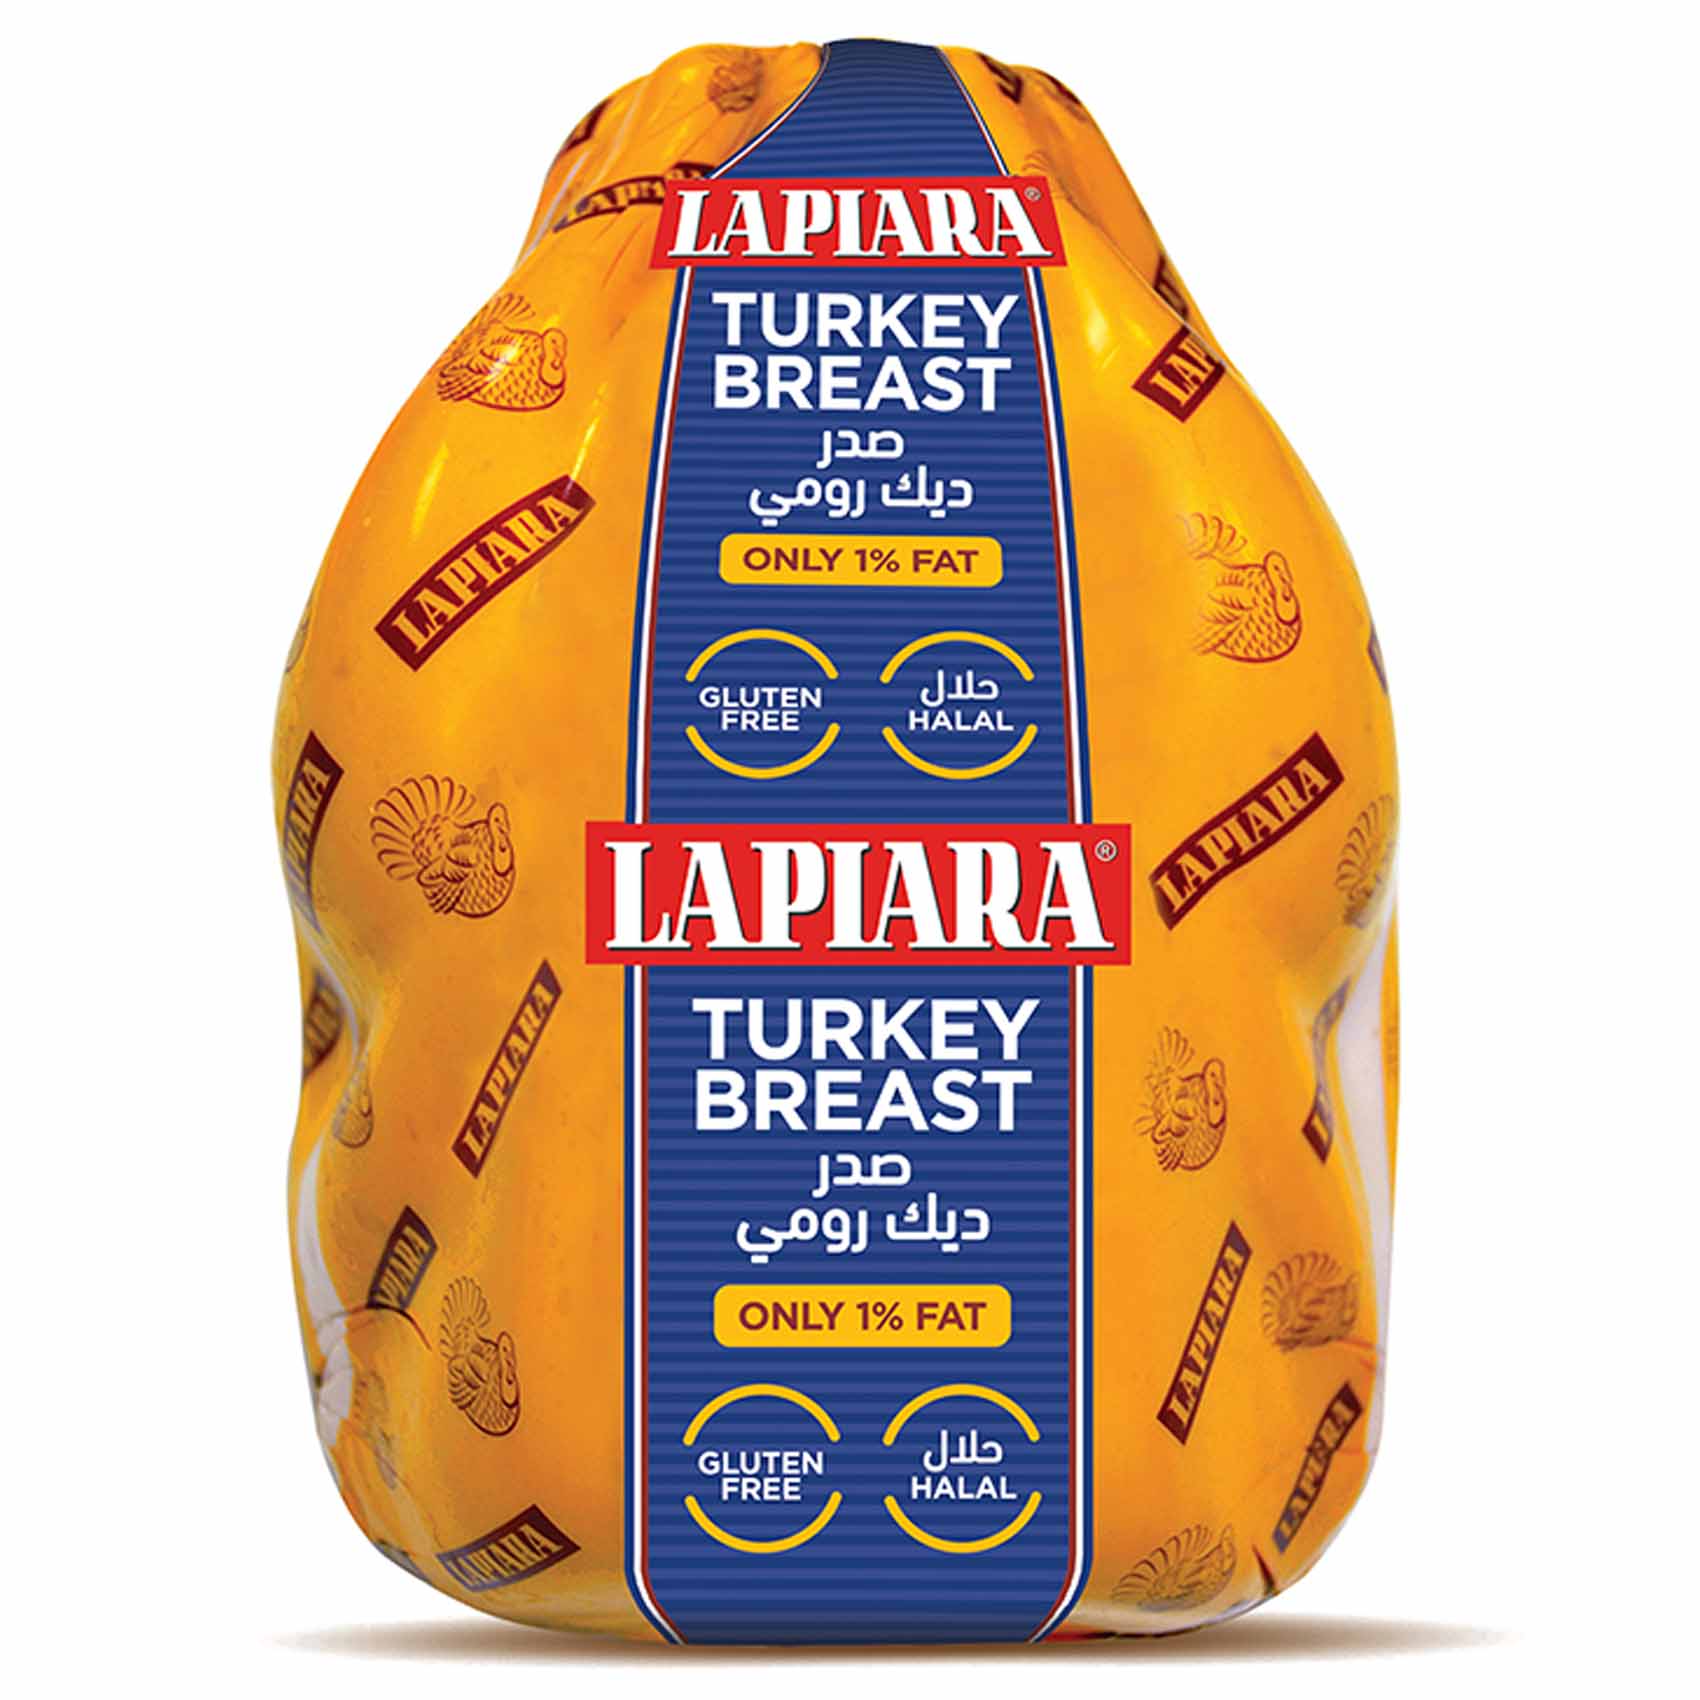 La Piara Cooked Turkey Breast 1% Fat